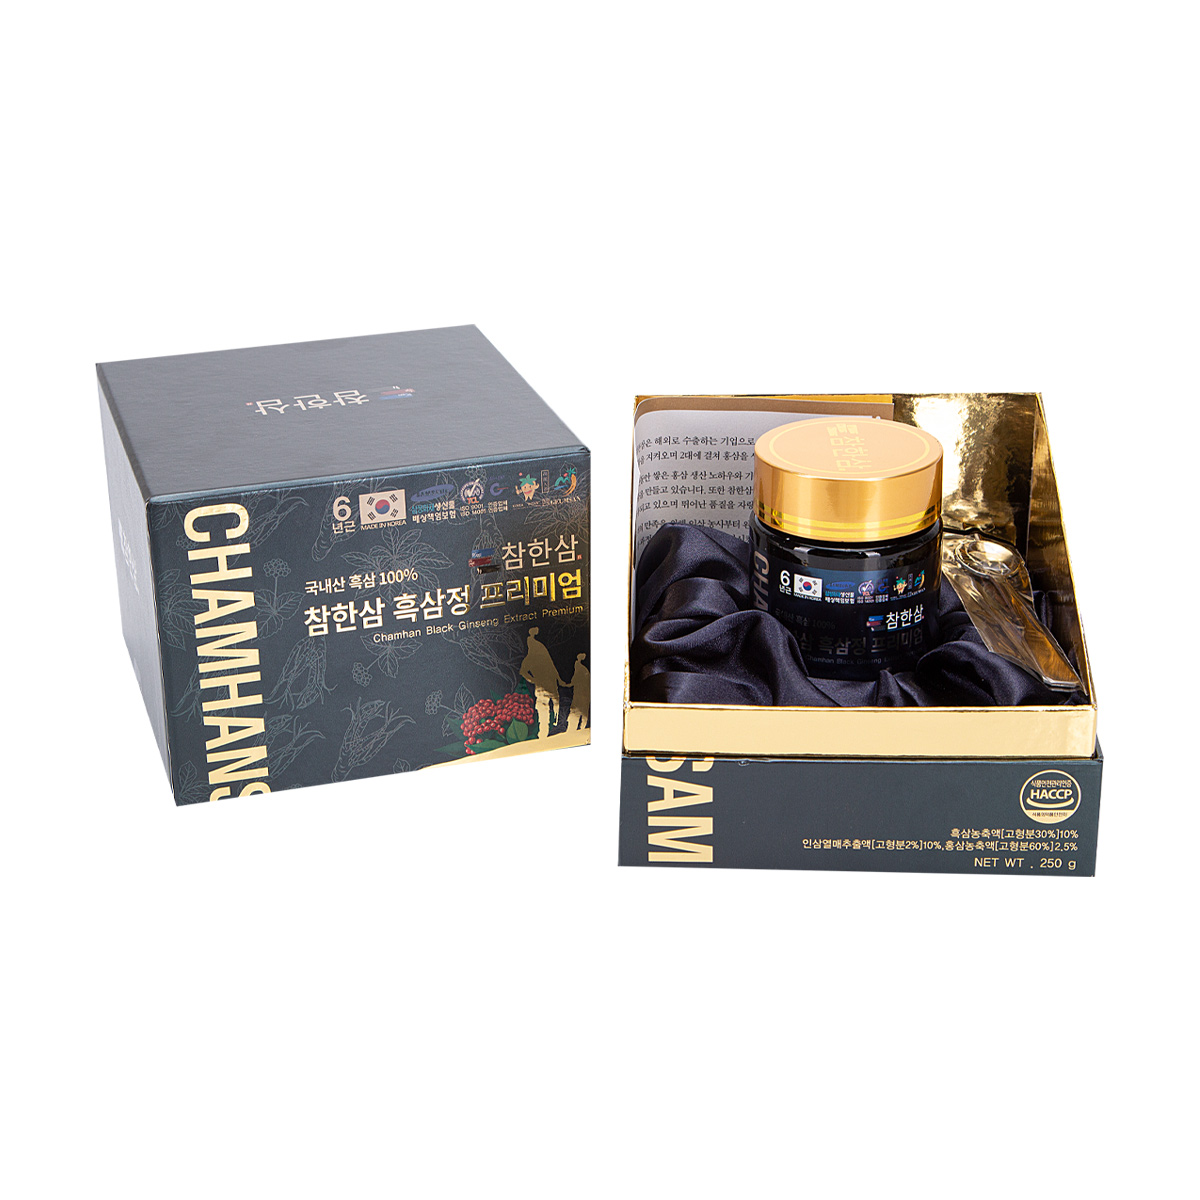 Chamhansam Black Ginseng Extract Premium, густой экстракт черного женьшеня (250 мл)